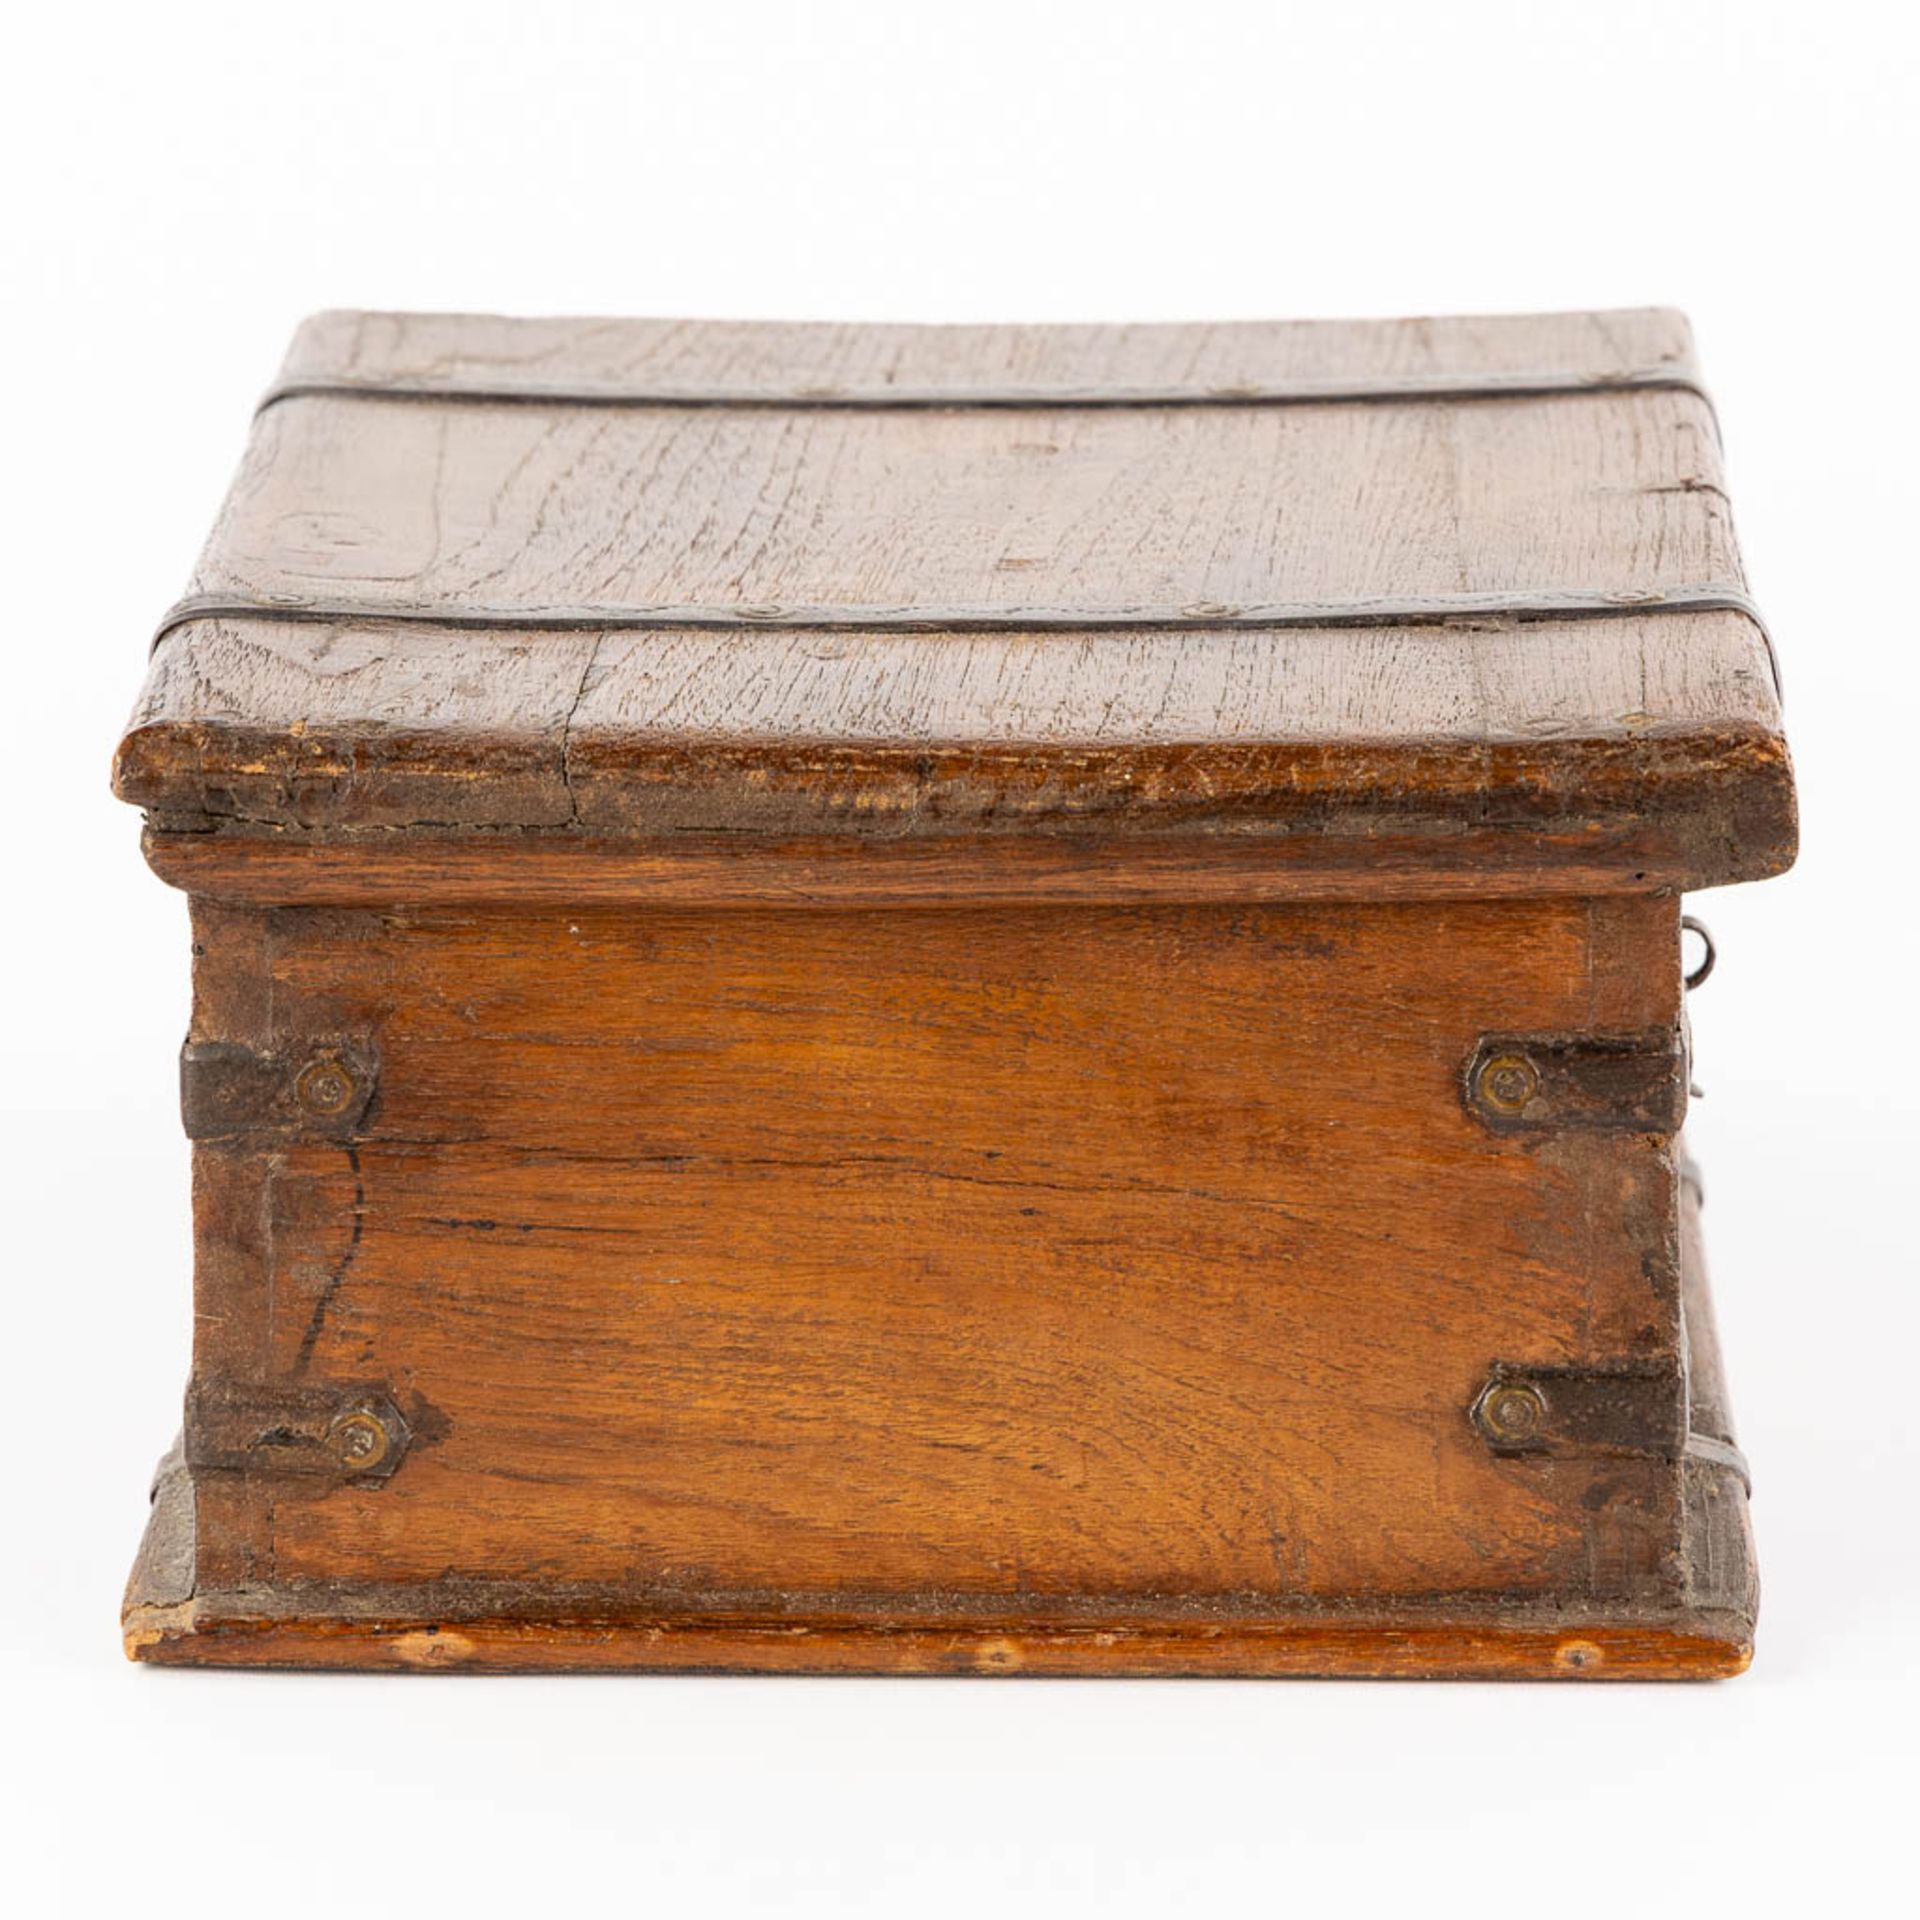 An antique money box or storage chest, oak and wrought iron, 19th C. (L:23 x W:31 x H:13 cm) - Bild 6 aus 13